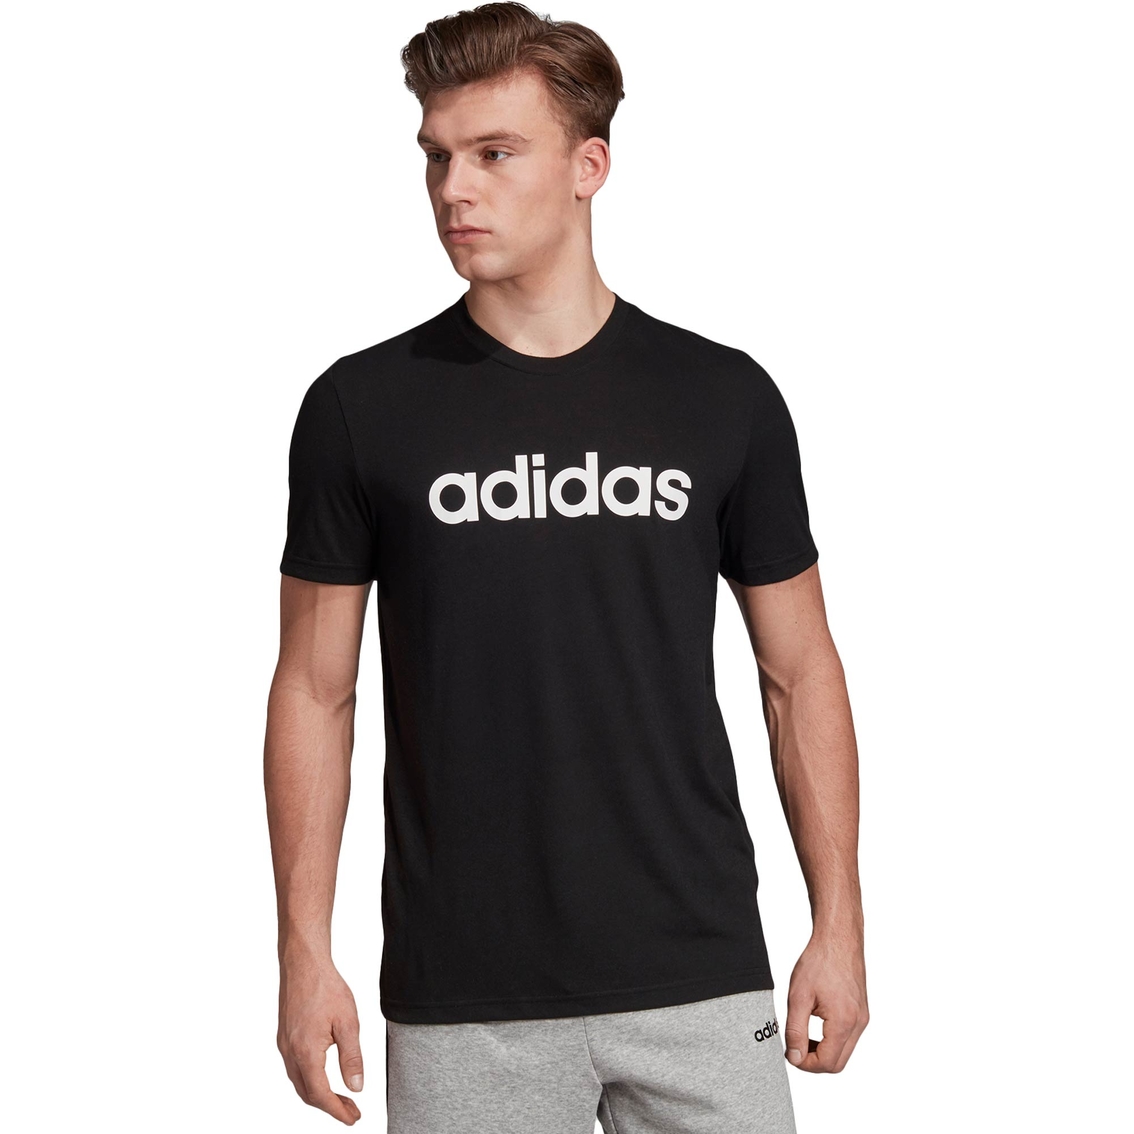 Adidas D2m Logo Tee | Shirts | Clothing 